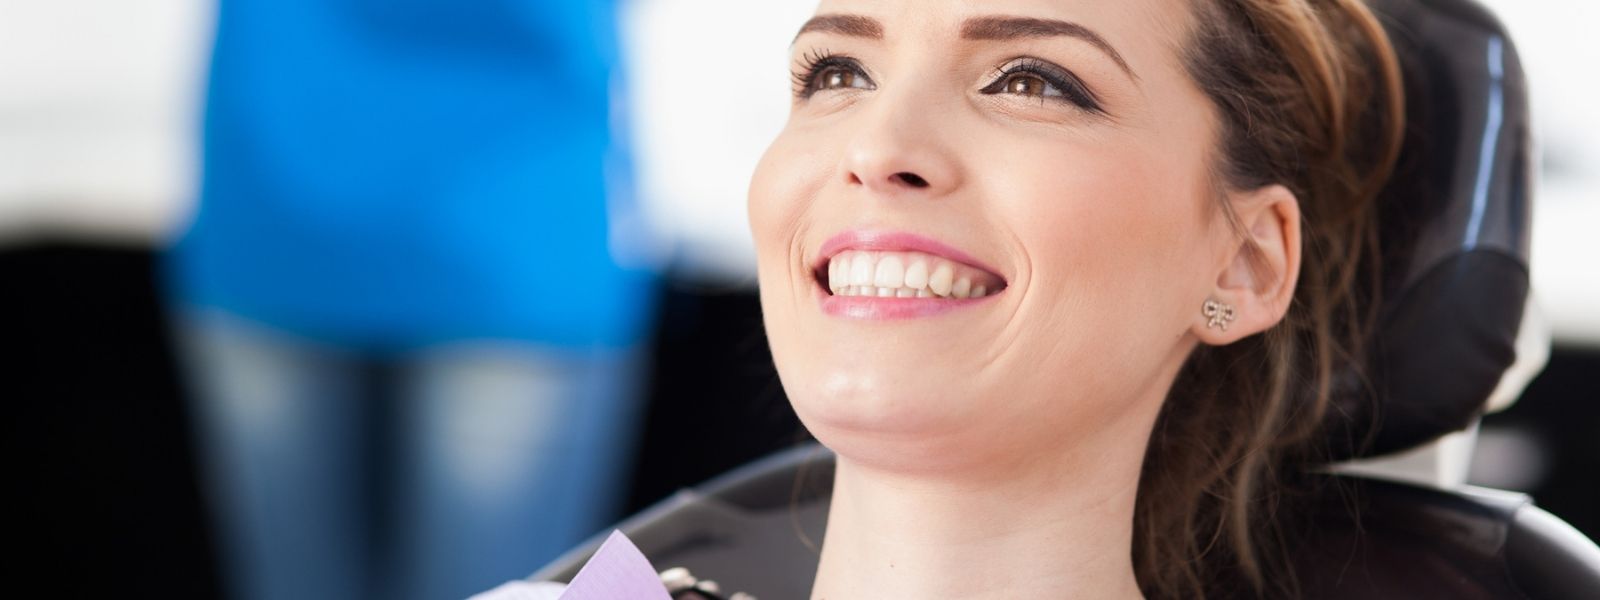 Girl in dental chair smiling.